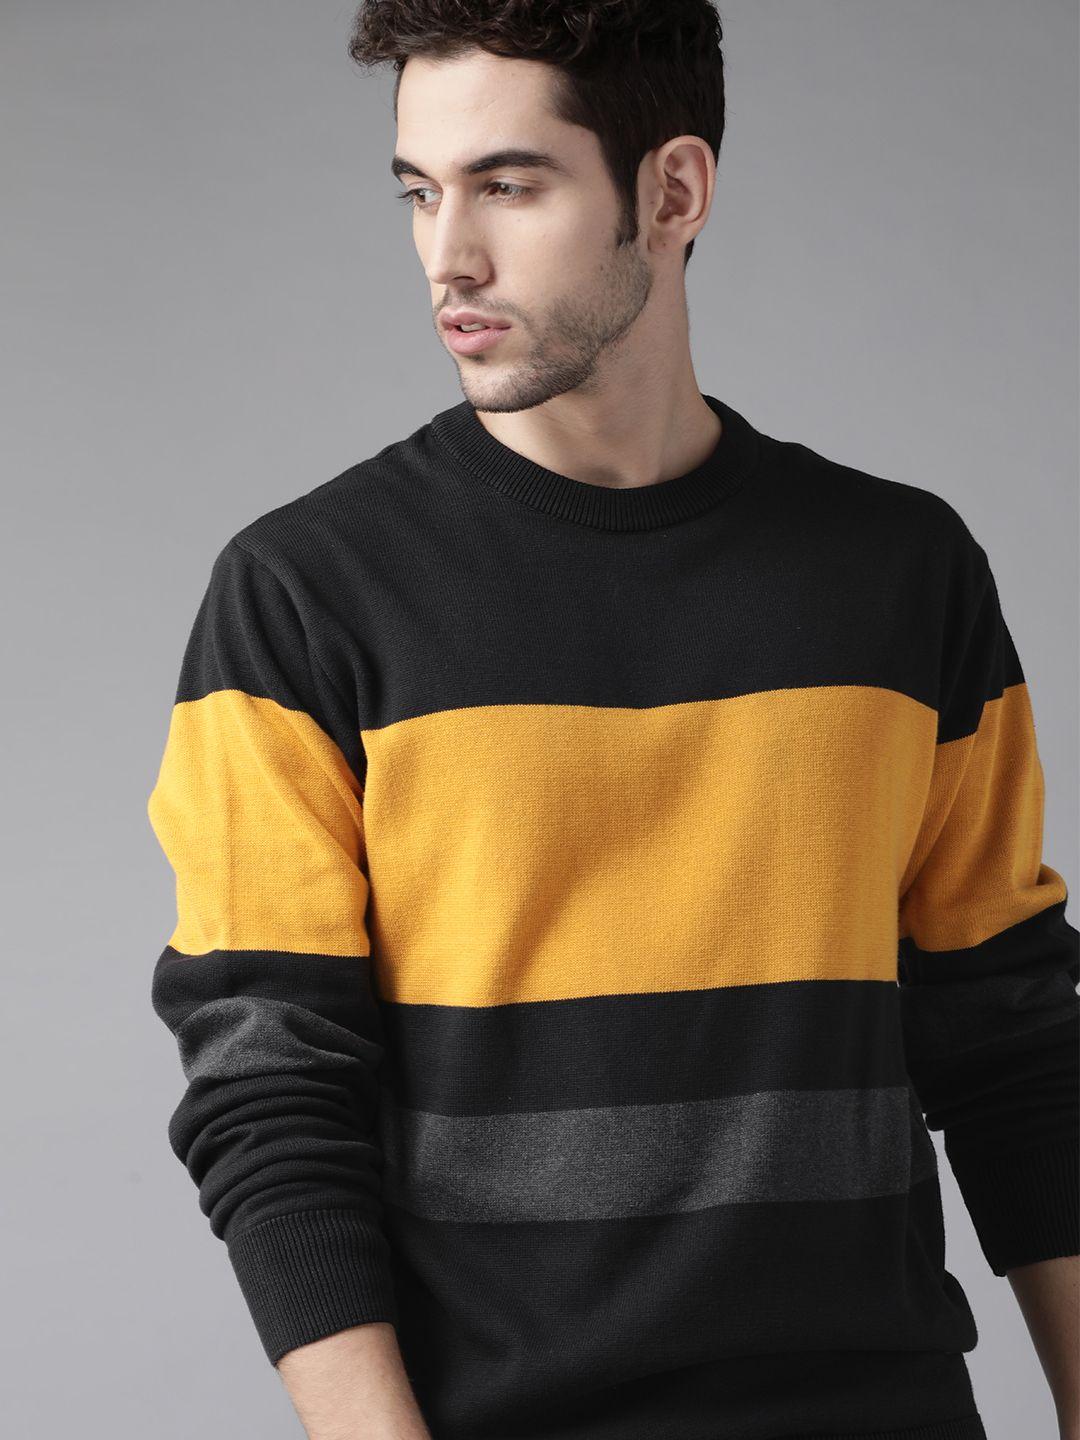 roadster-men-black-&-mustard-yellow-striped-pullover